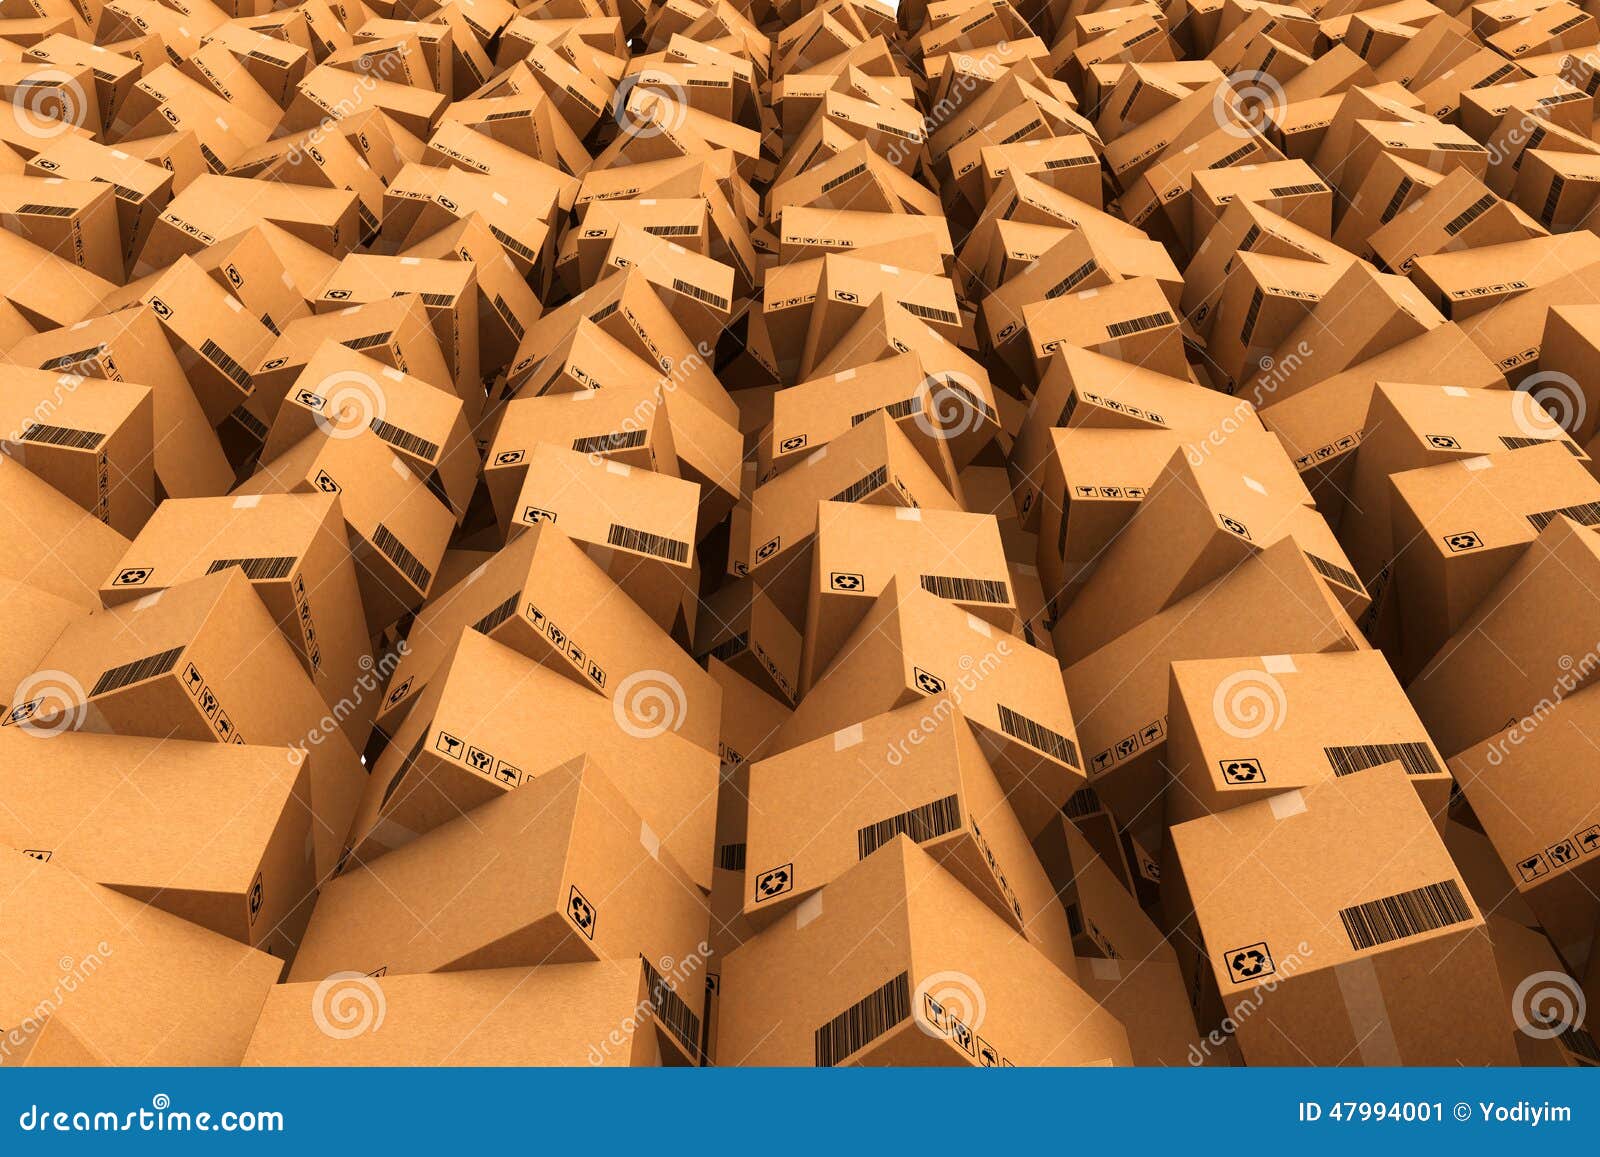 cardboard boxes.